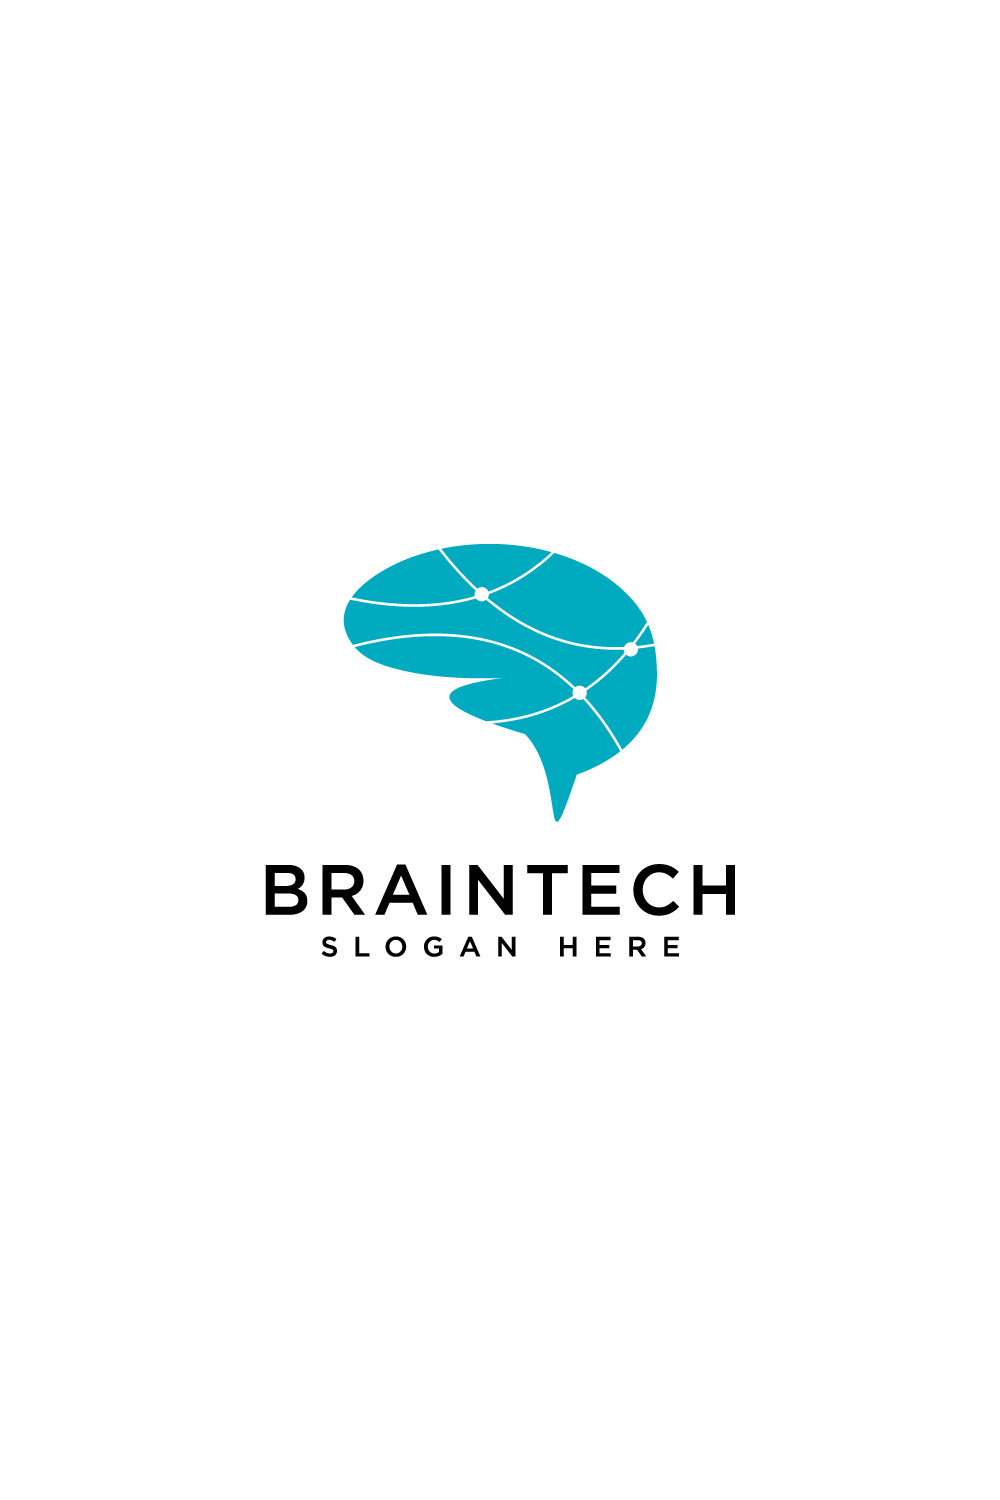 brain technology logo design vector pinterest preview image.